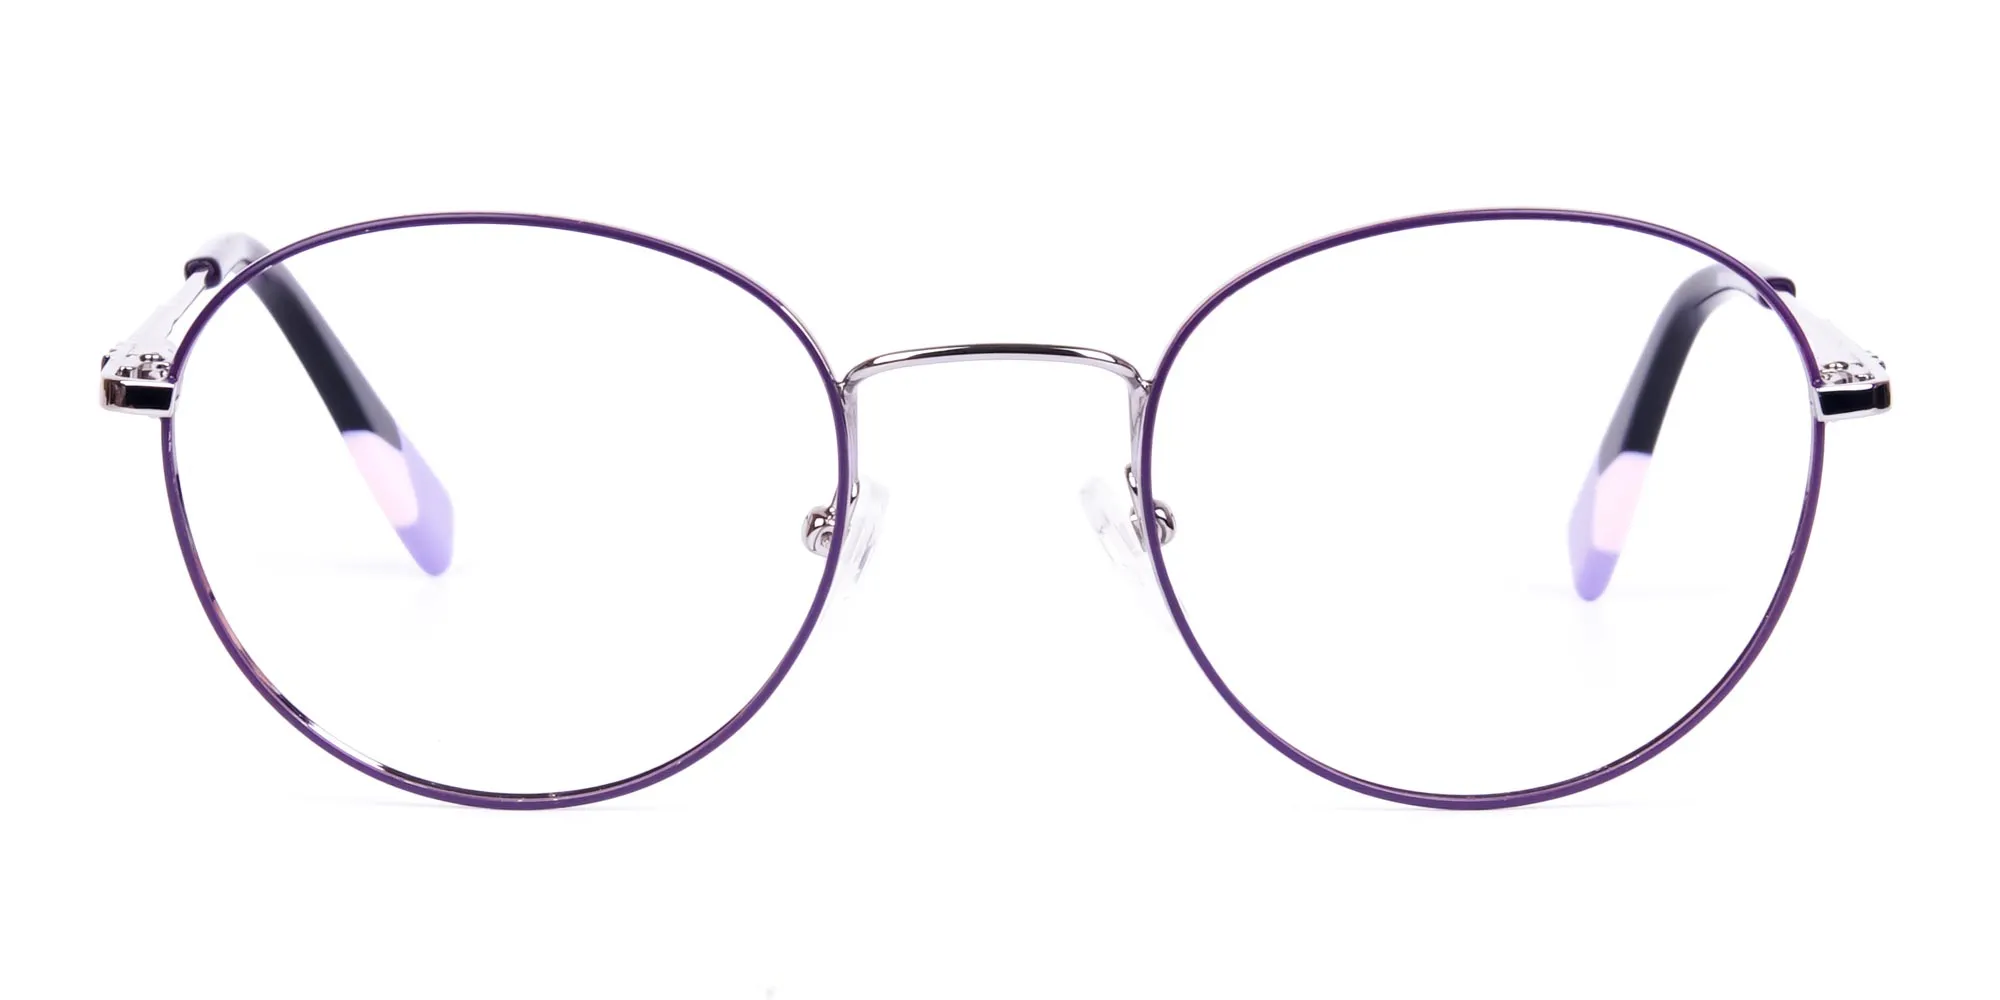 Stylish Dark Purple and Silver Round Glasses-2